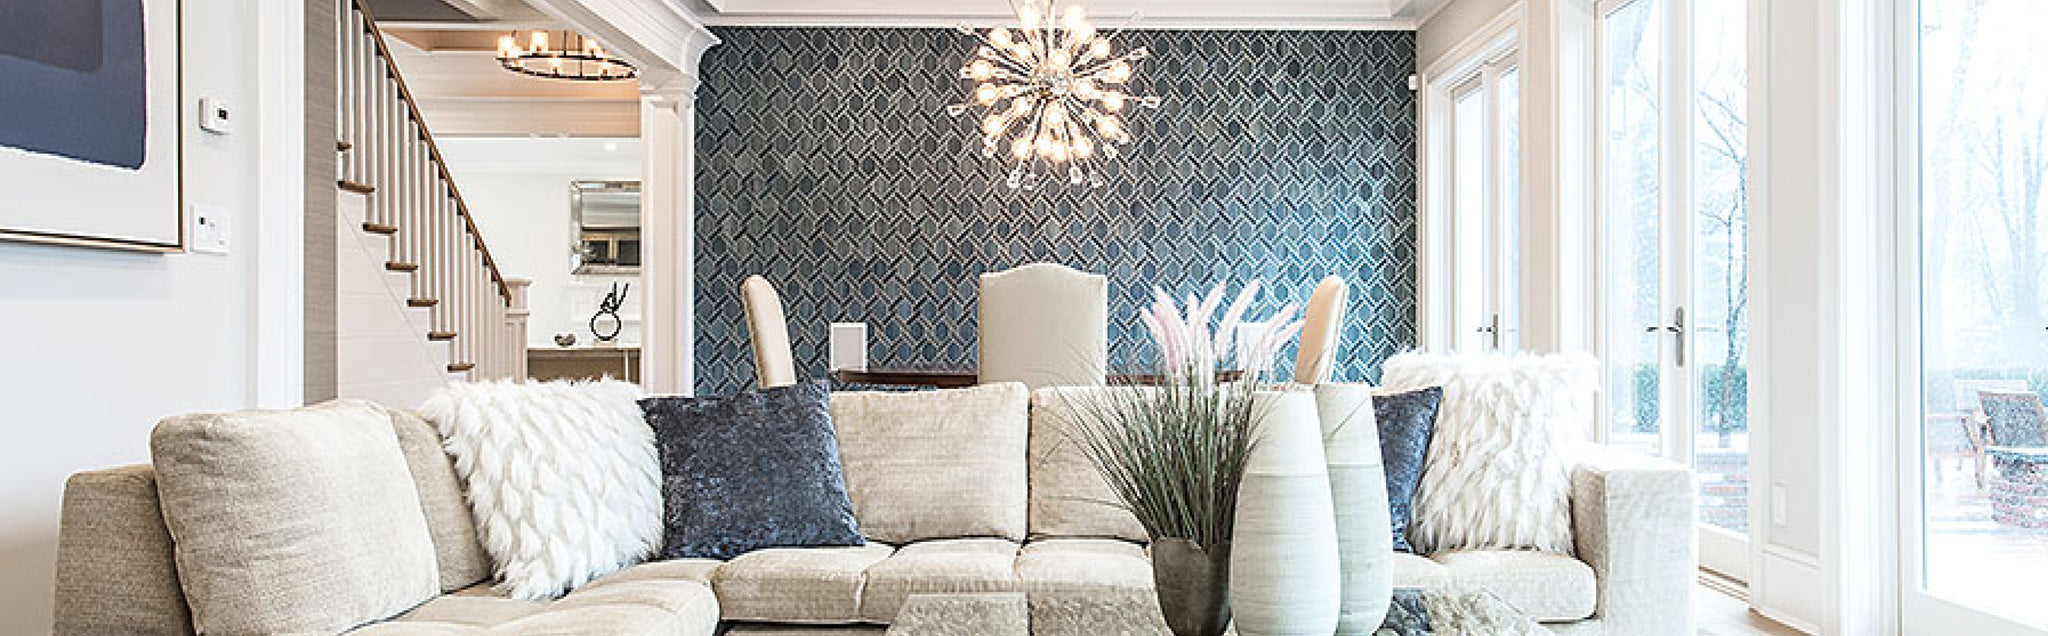 Ocean Blu Designs - Interior Designers serving the NY Metropolitan, Hamptons and Long Island area.